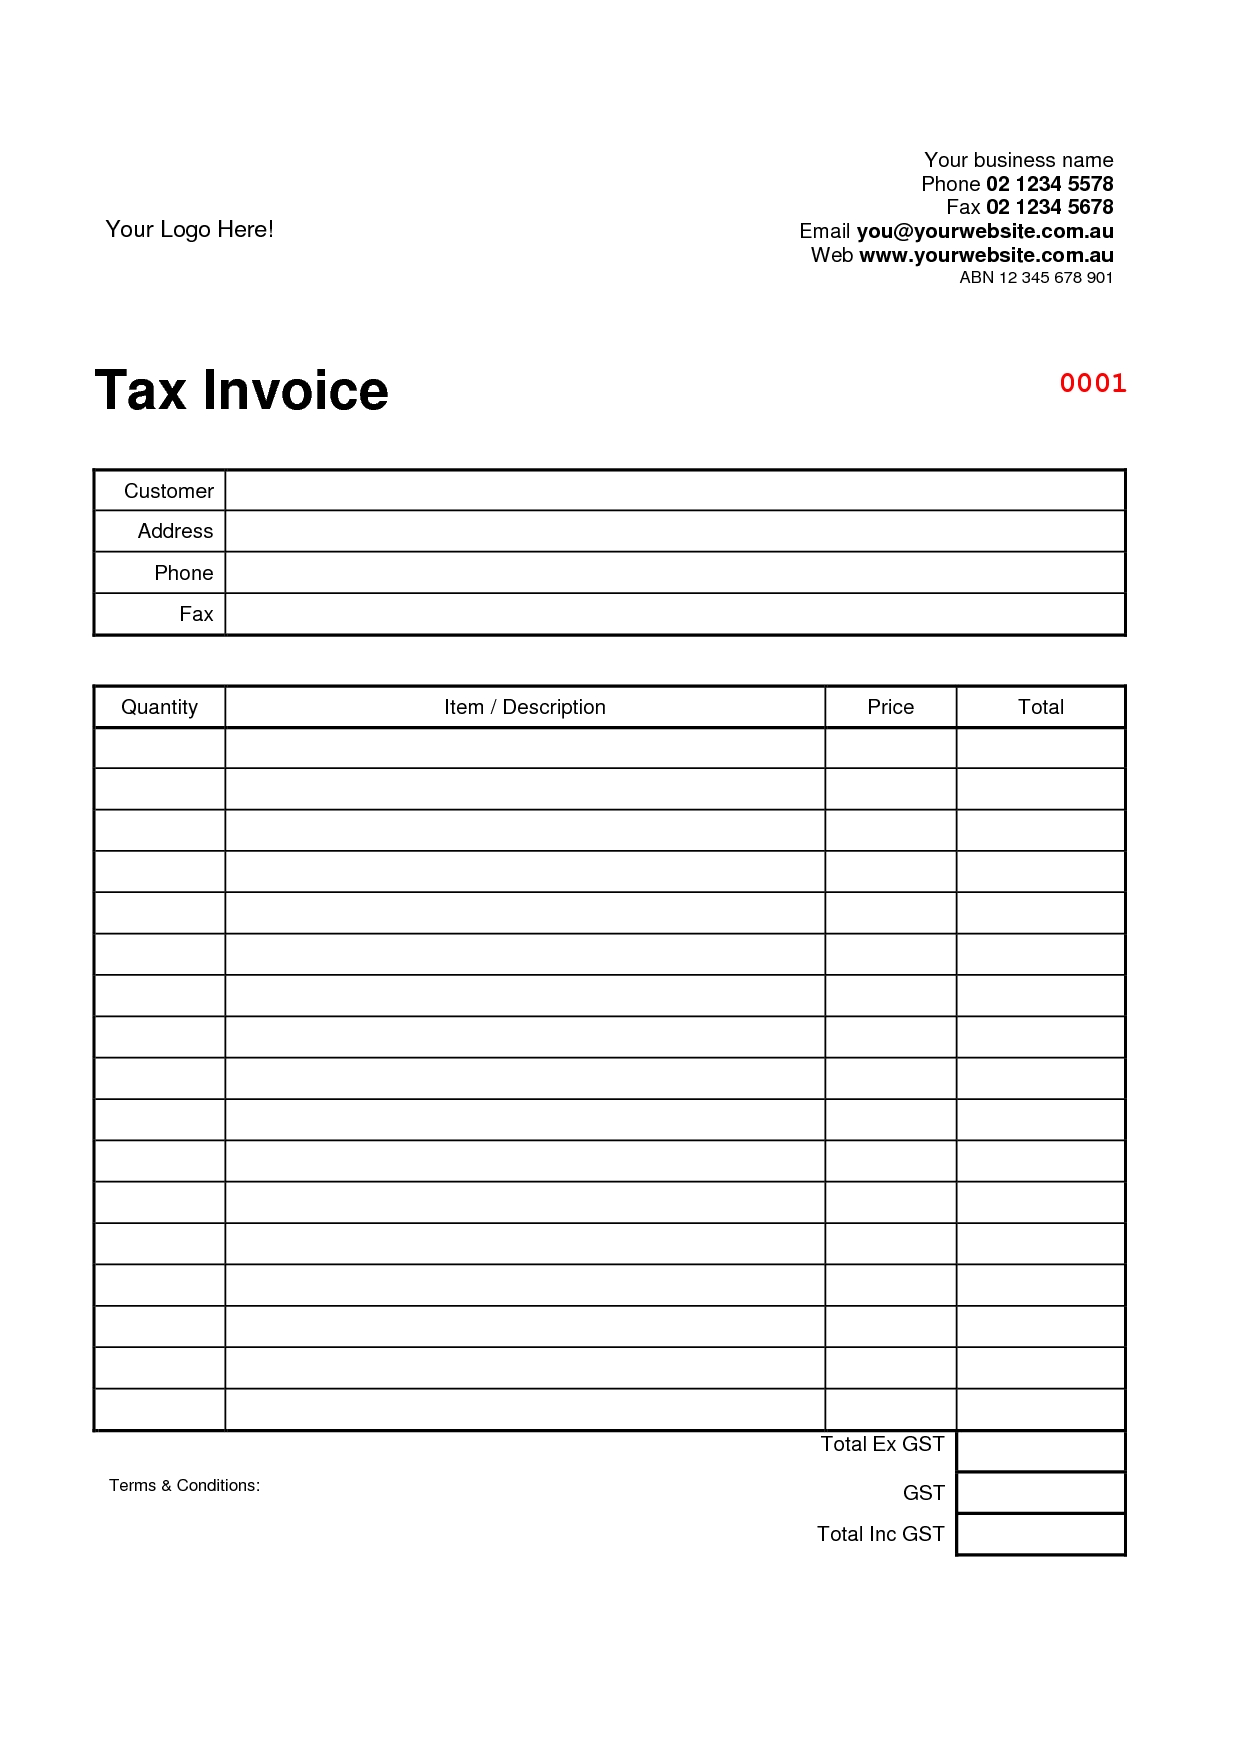 tax invoice templates tax invoices tax invoice samples tax invoice template pdf 1240 X 1754